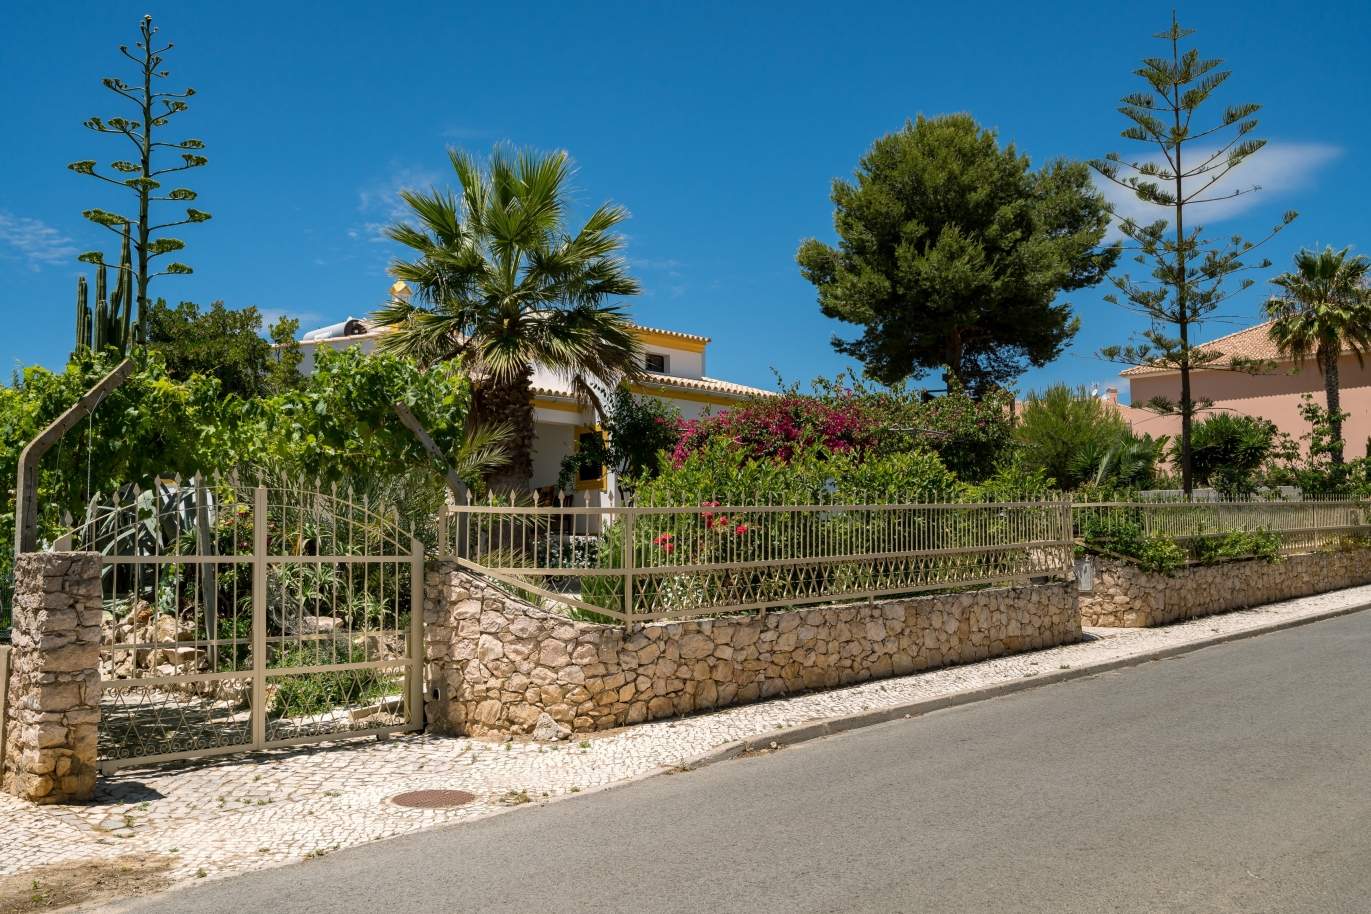 4 Bedroom Villa with plot of land, sale, Albufeira, Algarve, Portugal_143789